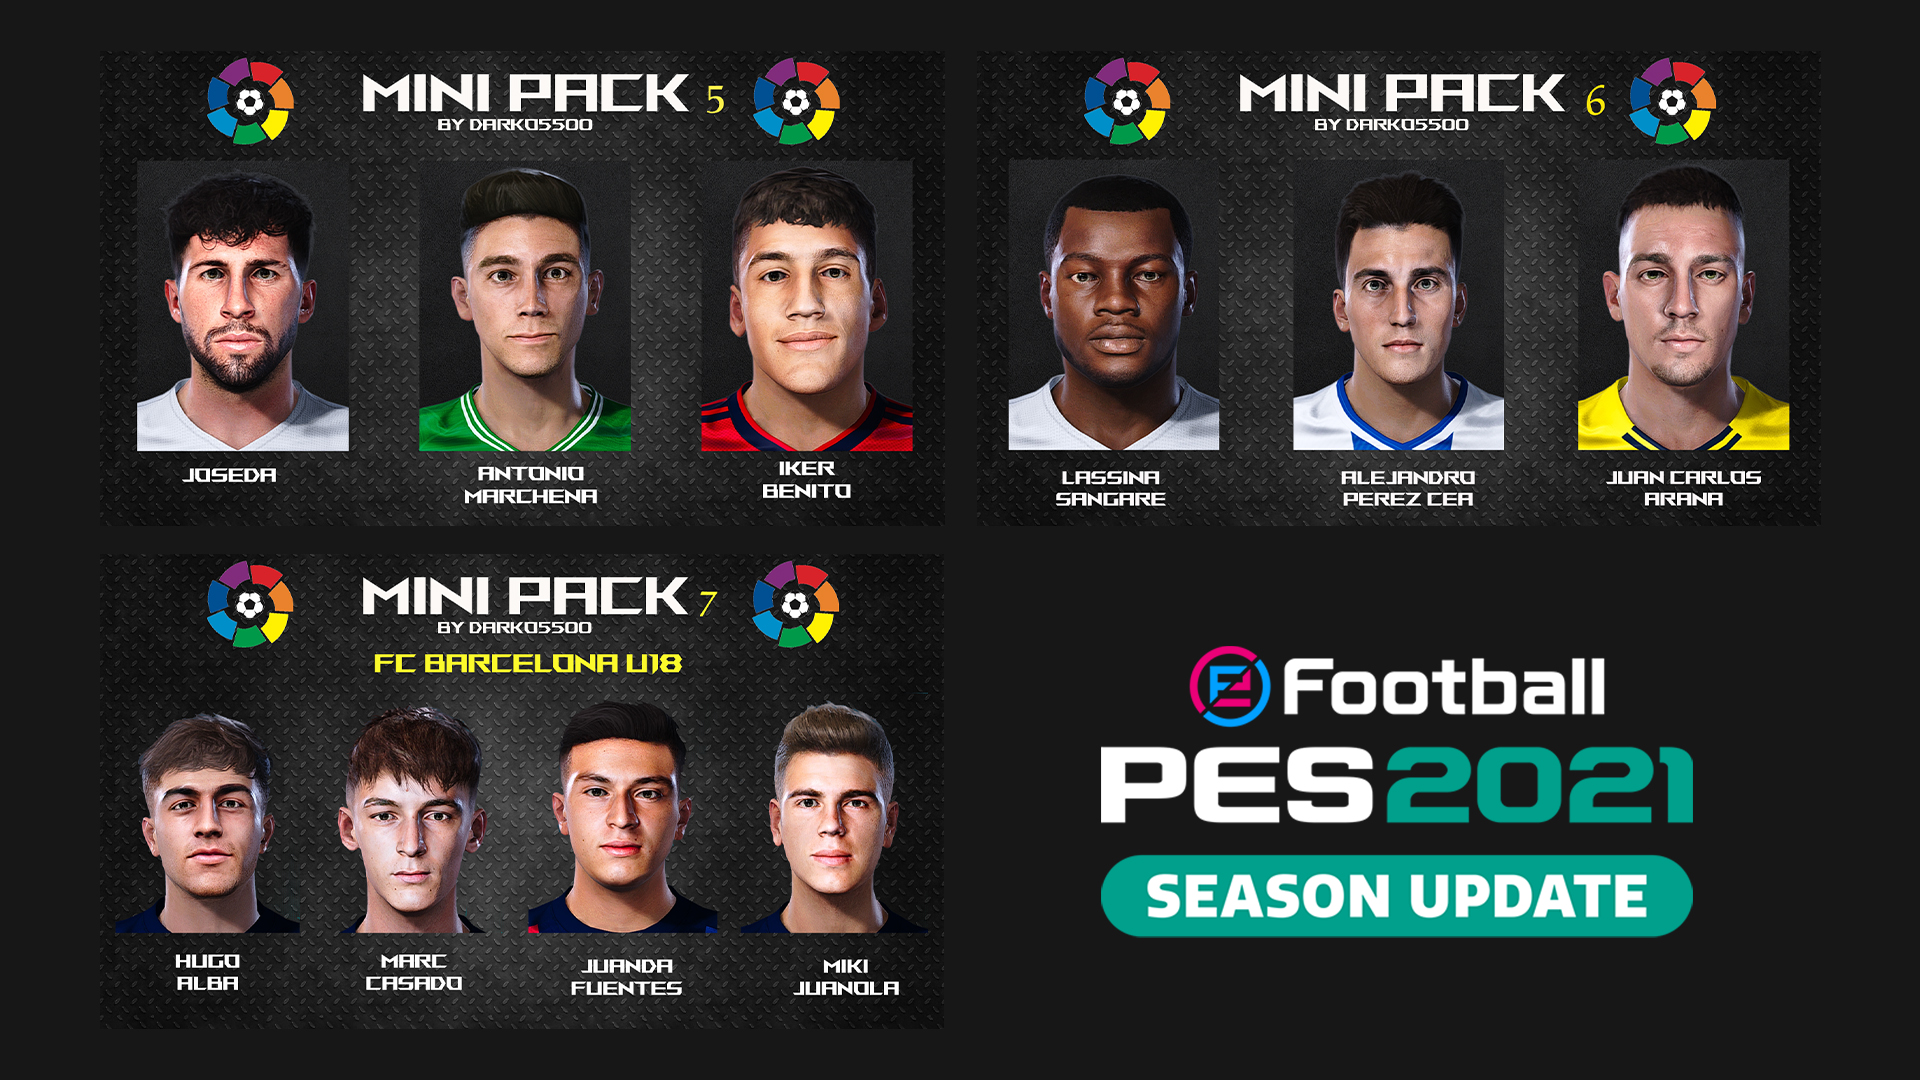 eFootball PES 2021 Faces - LaLiga Mini pack 5, 6 & 7 by Darko5500